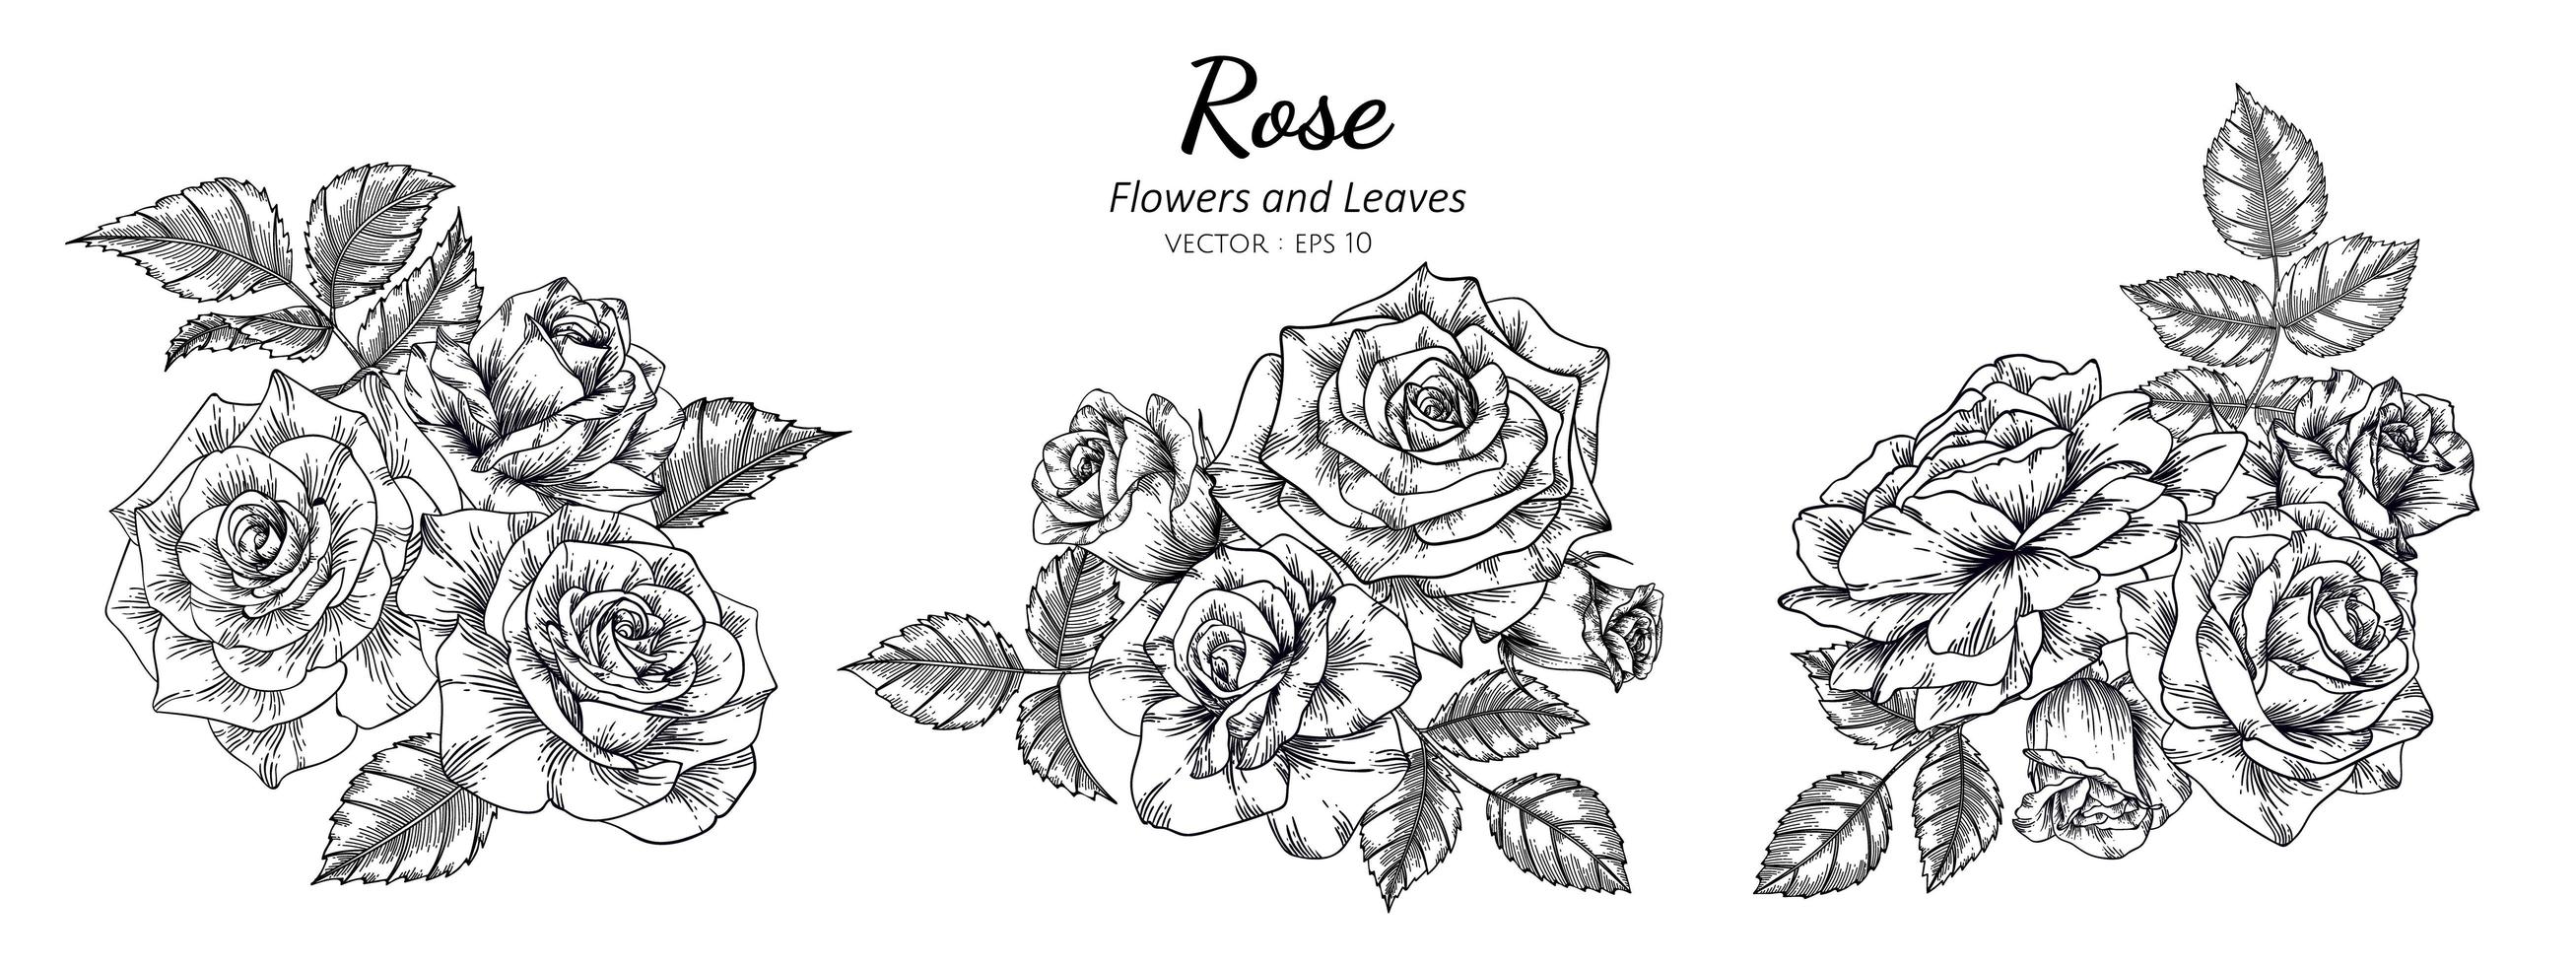 rose botaniche disegnate a mano vettore